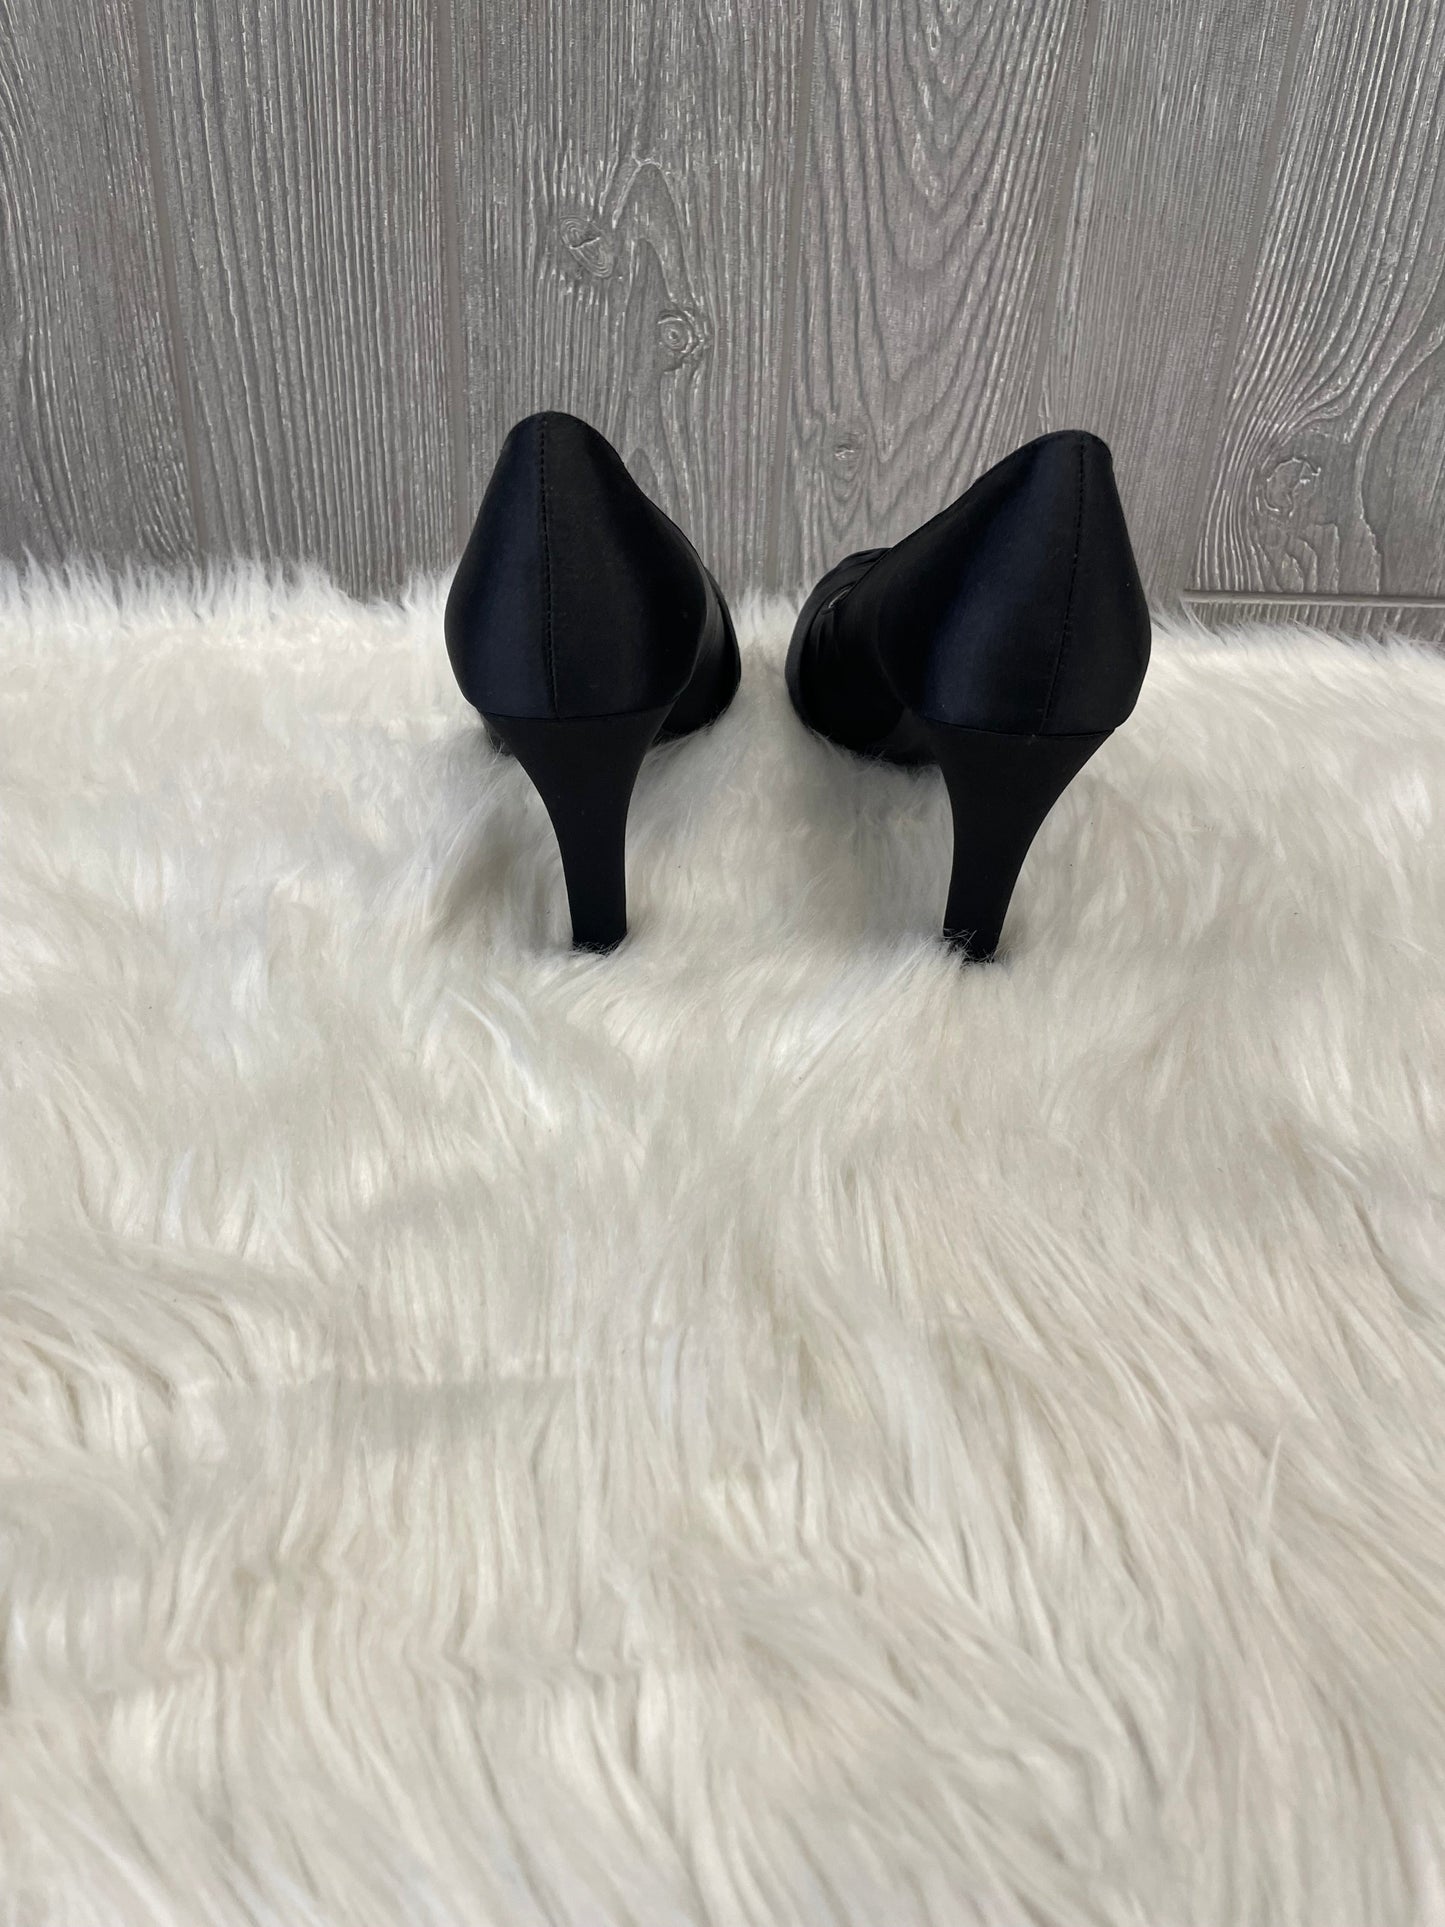 Black Shoes Heels Stiletto Mootsies Tootsies, Size 8.5